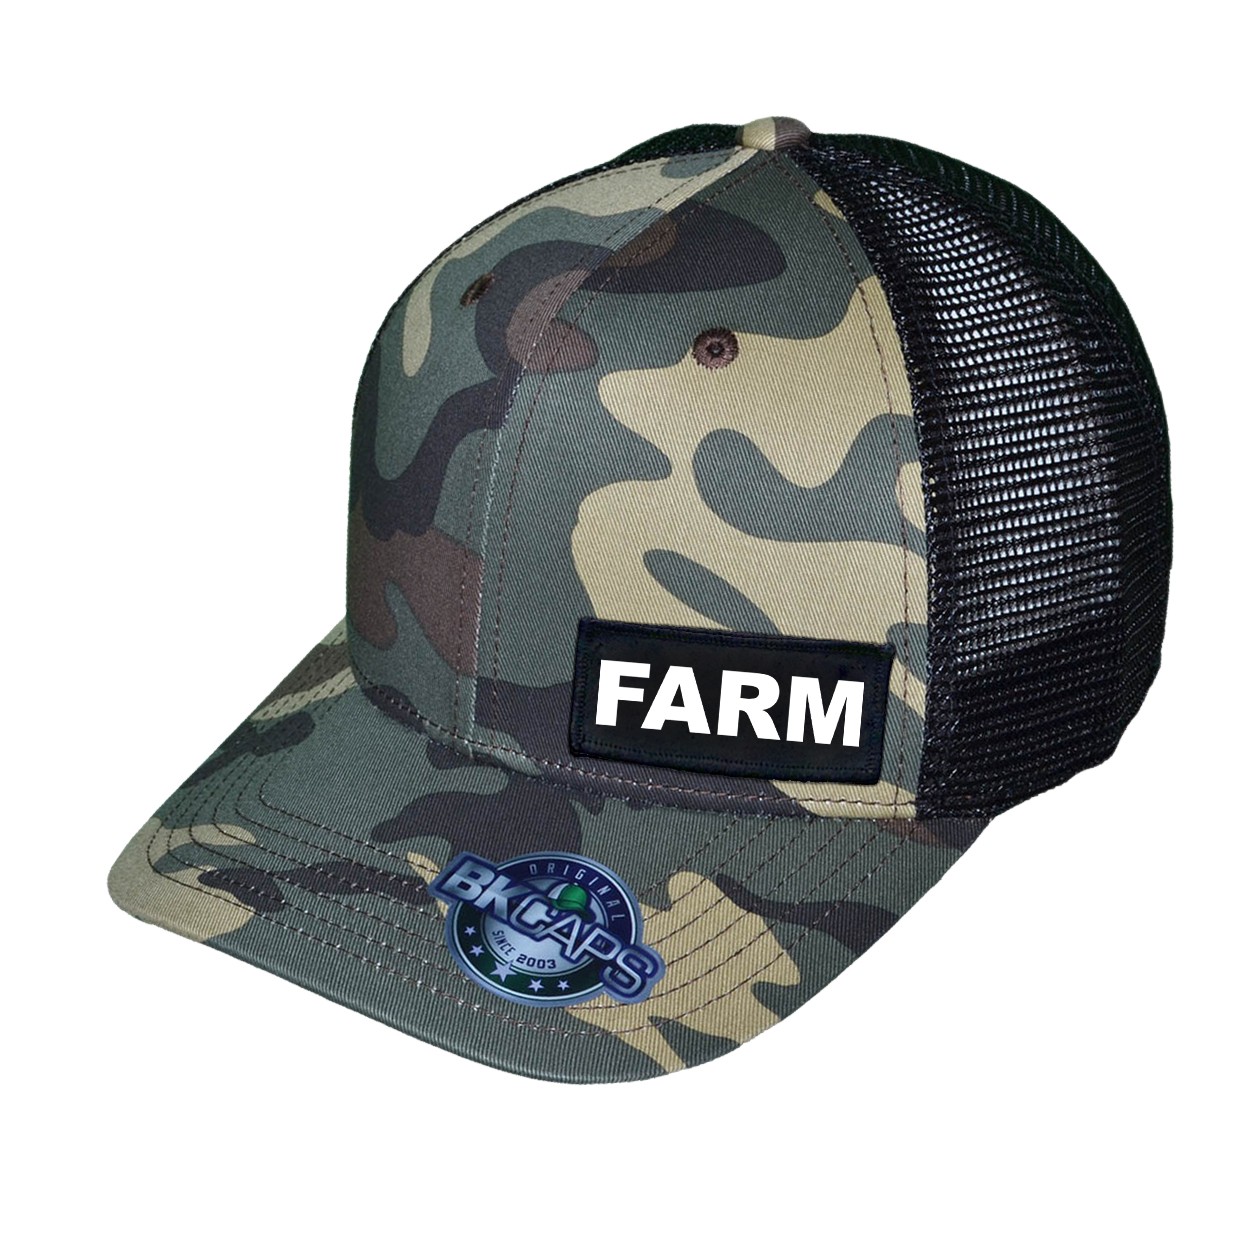 Farm Brand Logo Night Out Woven Patch Snapback Trucker Hat Khaki/Camo (White Logo)